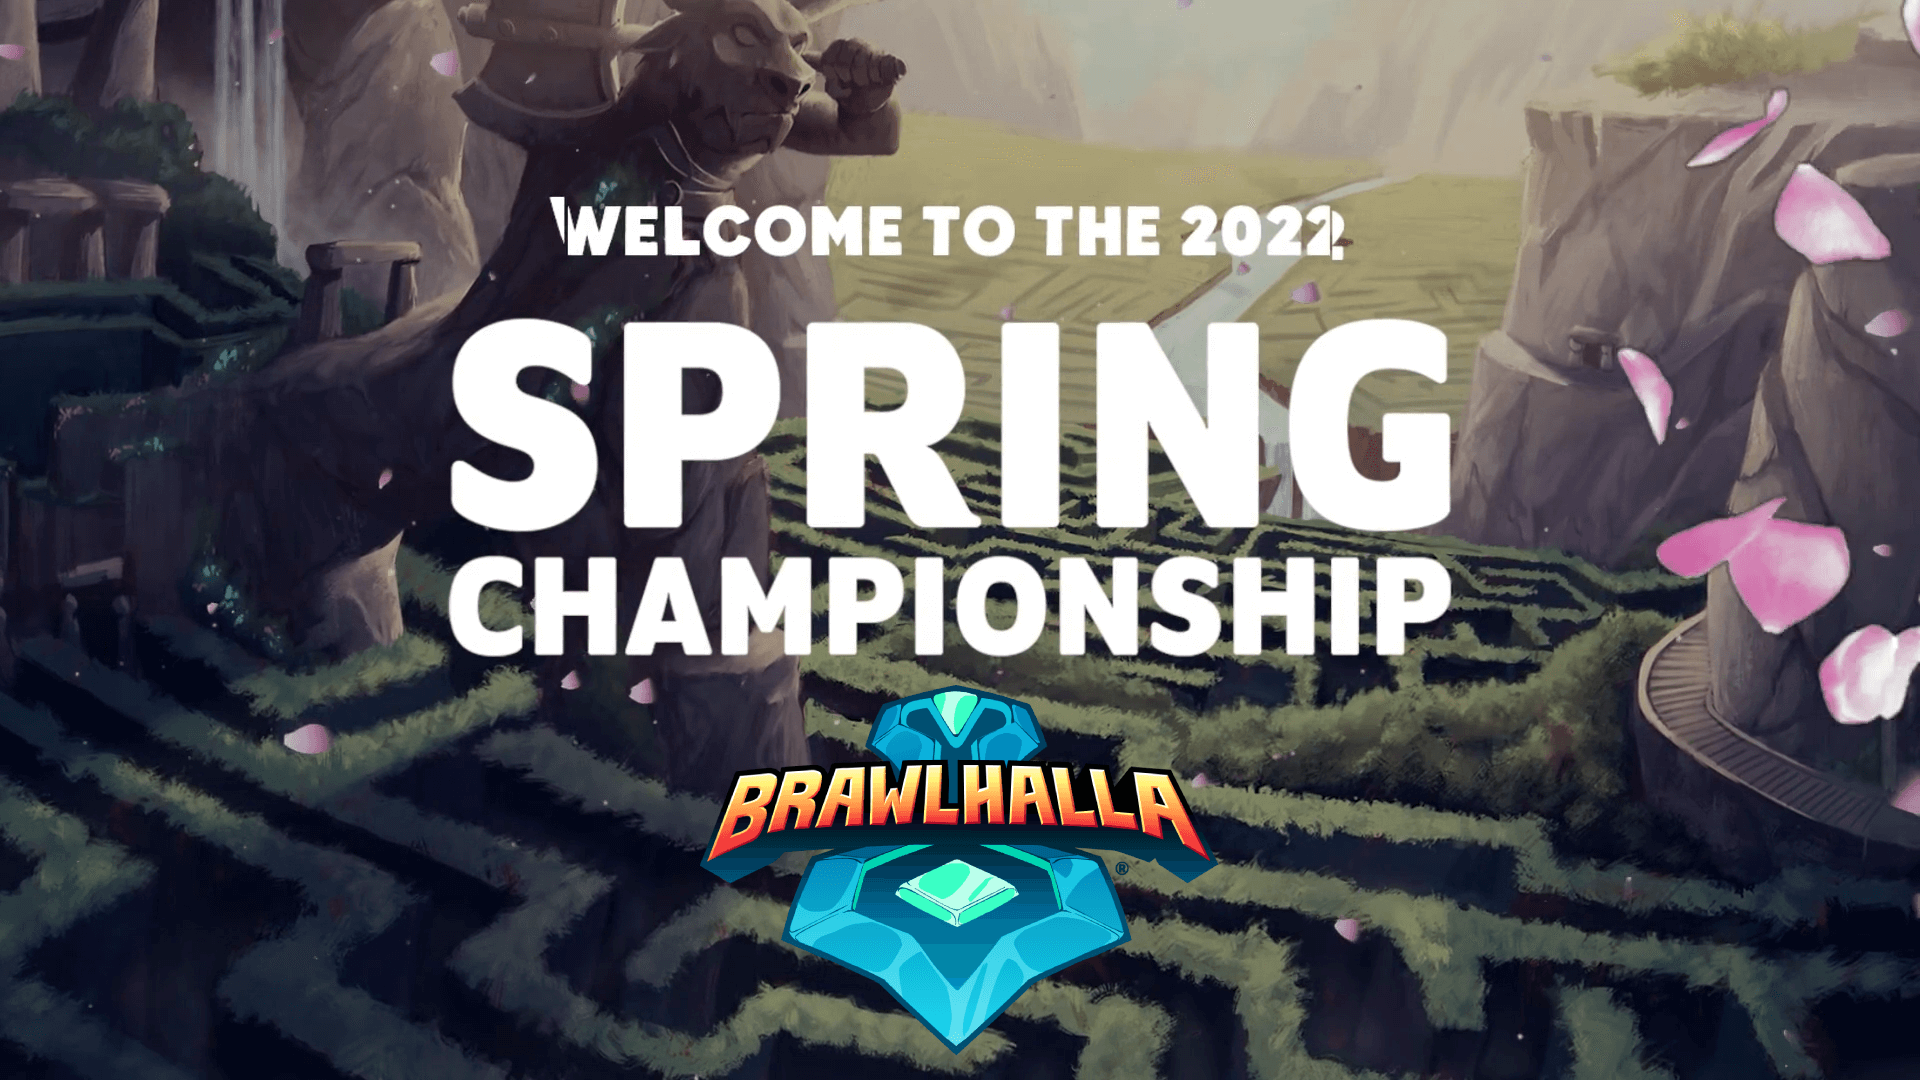 Brawlhalla Team Champions of Spring 2022